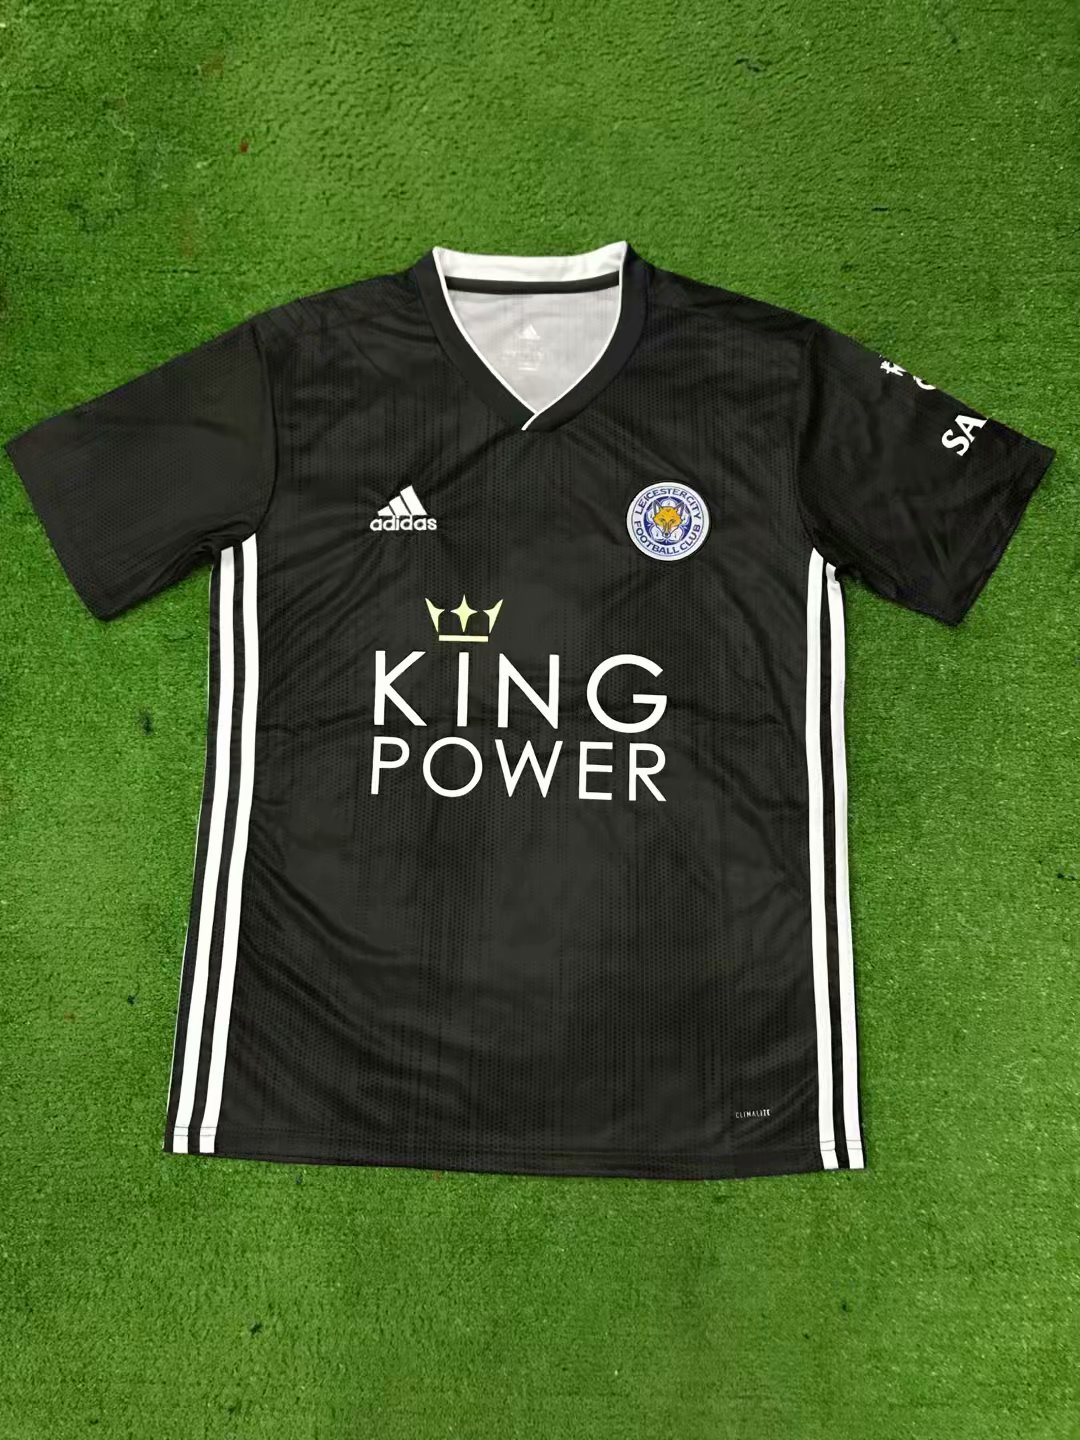 king power soccer jersey